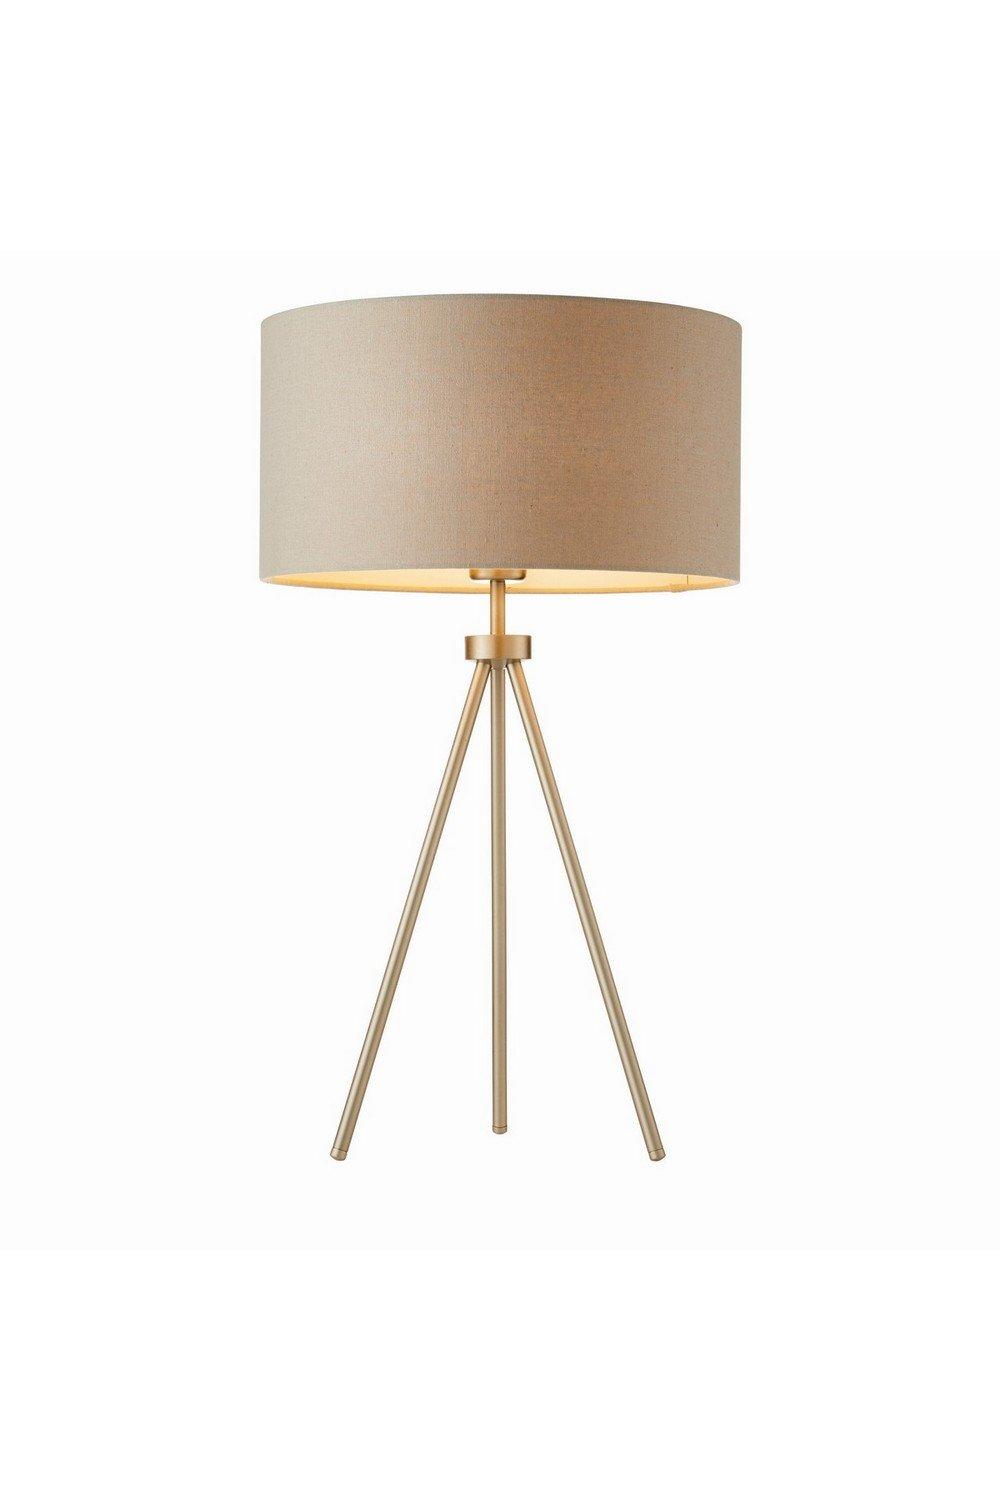 Tri 1 Light Table Lamp Matt Nickel Grey Linen Effect E27